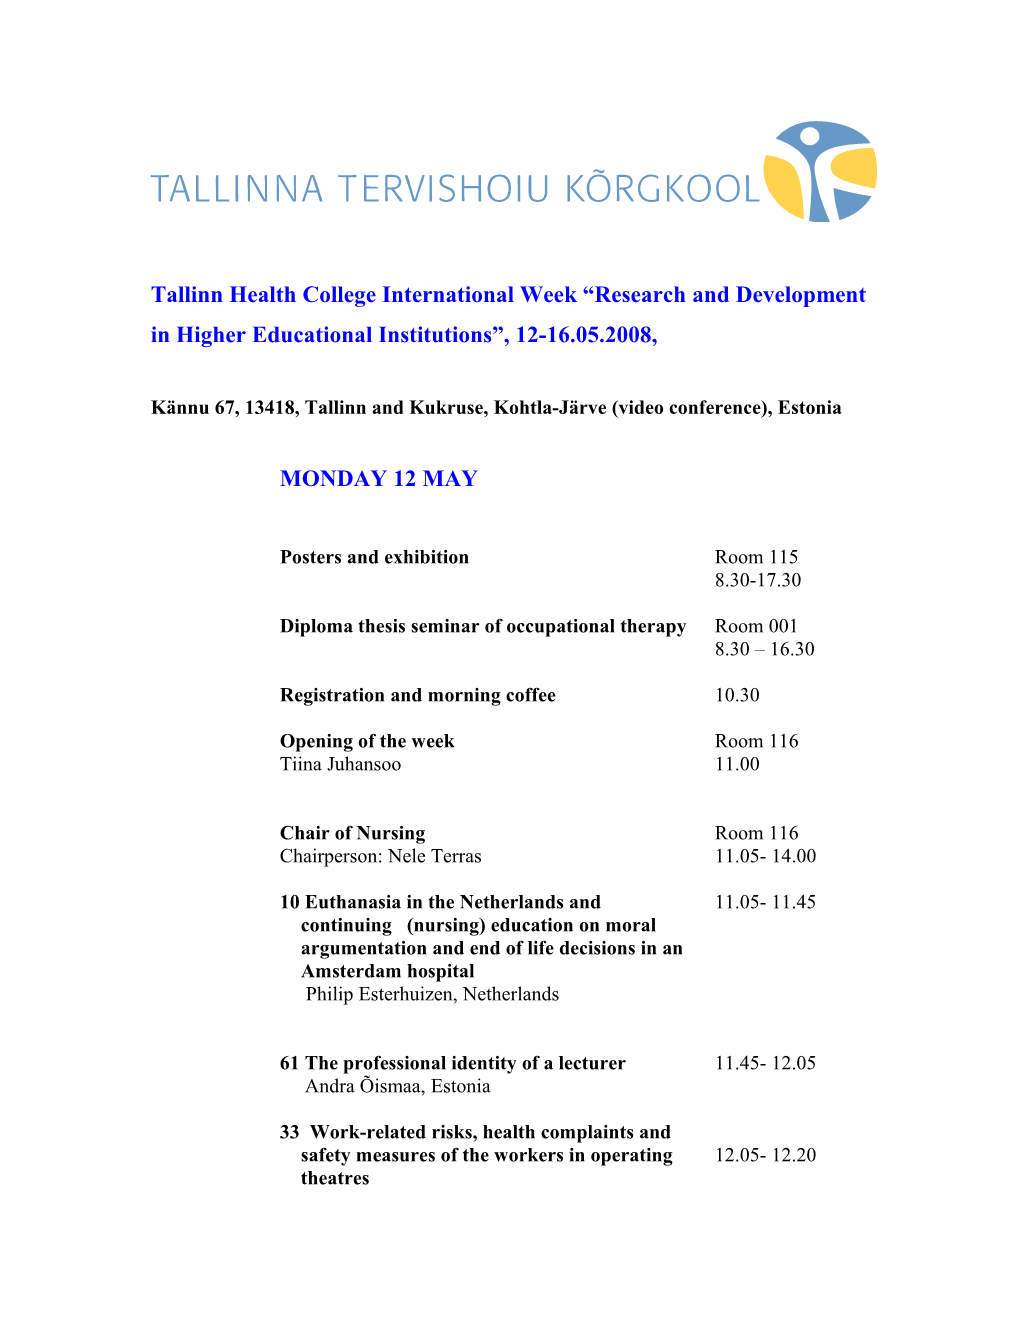 Tallinn Health College International Week Research and Development in Higher Educational